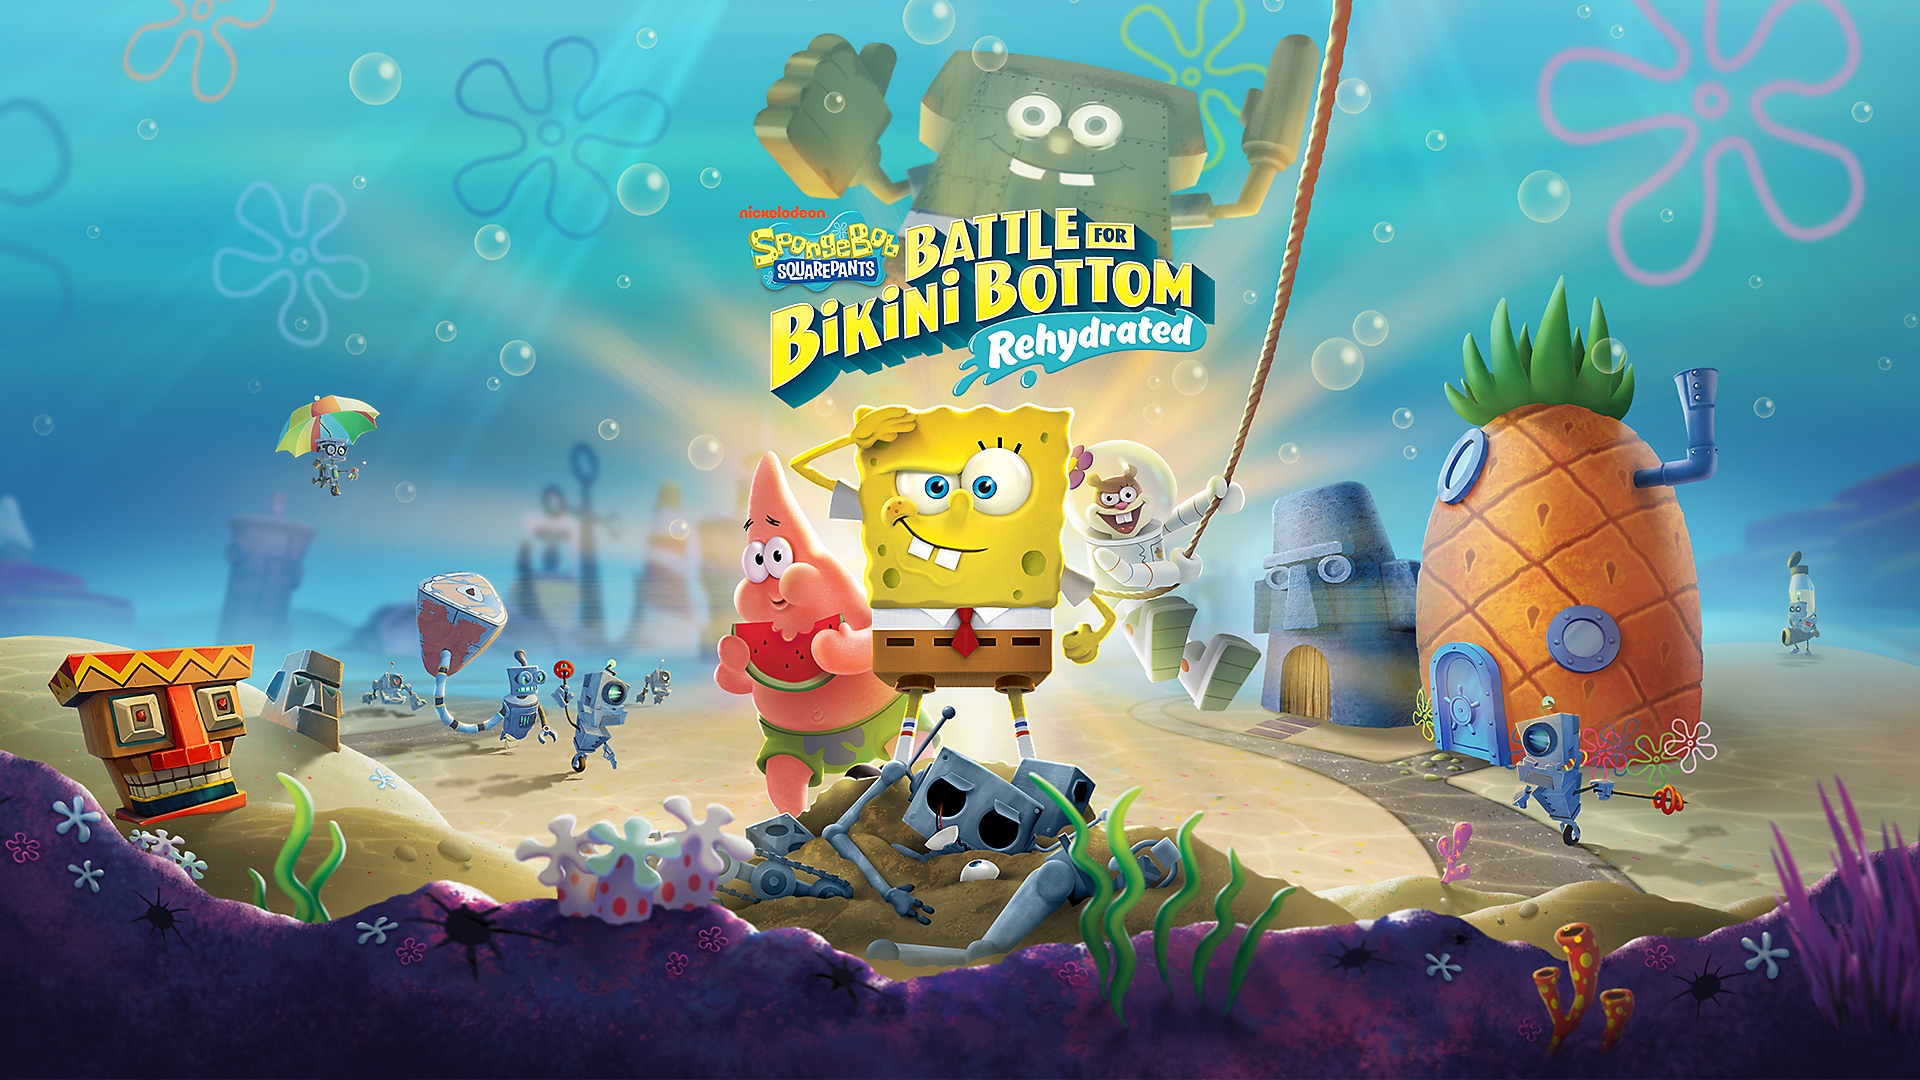 PS4向け『SpongeBob SquarePants: Battle for Bikini Bottom Rehydrated』で、パトリックがビキニタウンでパイナップルを食べる中、挨拶するスポンジ・ボブ